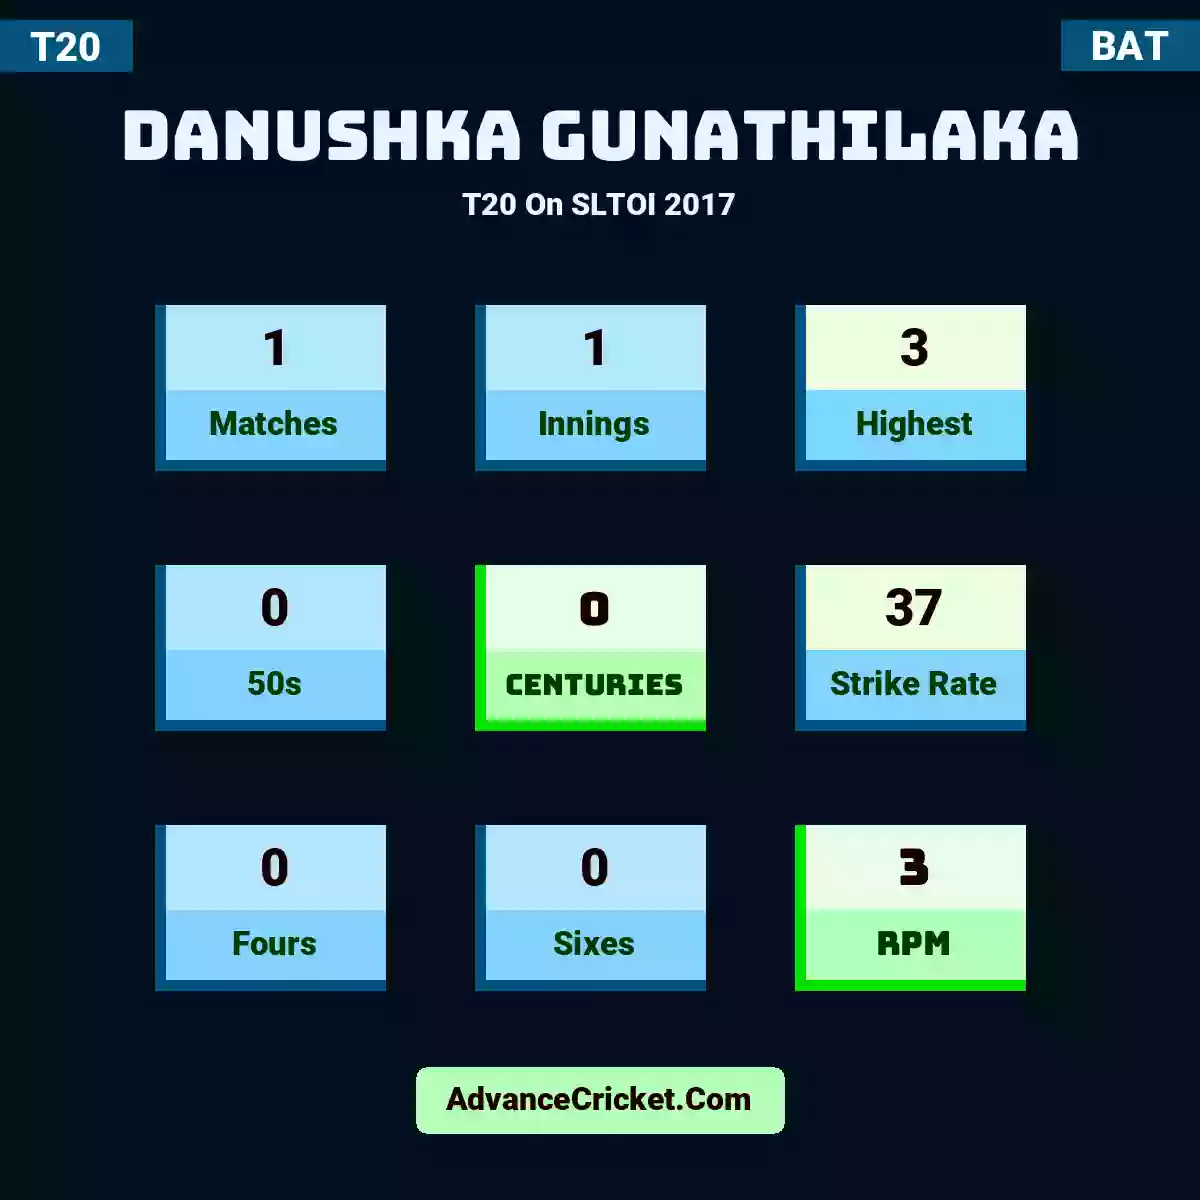 Danushka Gunathilaka T20  On SLTOI 2017, Danushka Gunathilaka played 1 matches, scored 3 runs as highest, 0 half-centuries, and 0 centuries, with a strike rate of 37. D.Gunathilaka hit 0 fours and 0 sixes, with an RPM of 3.